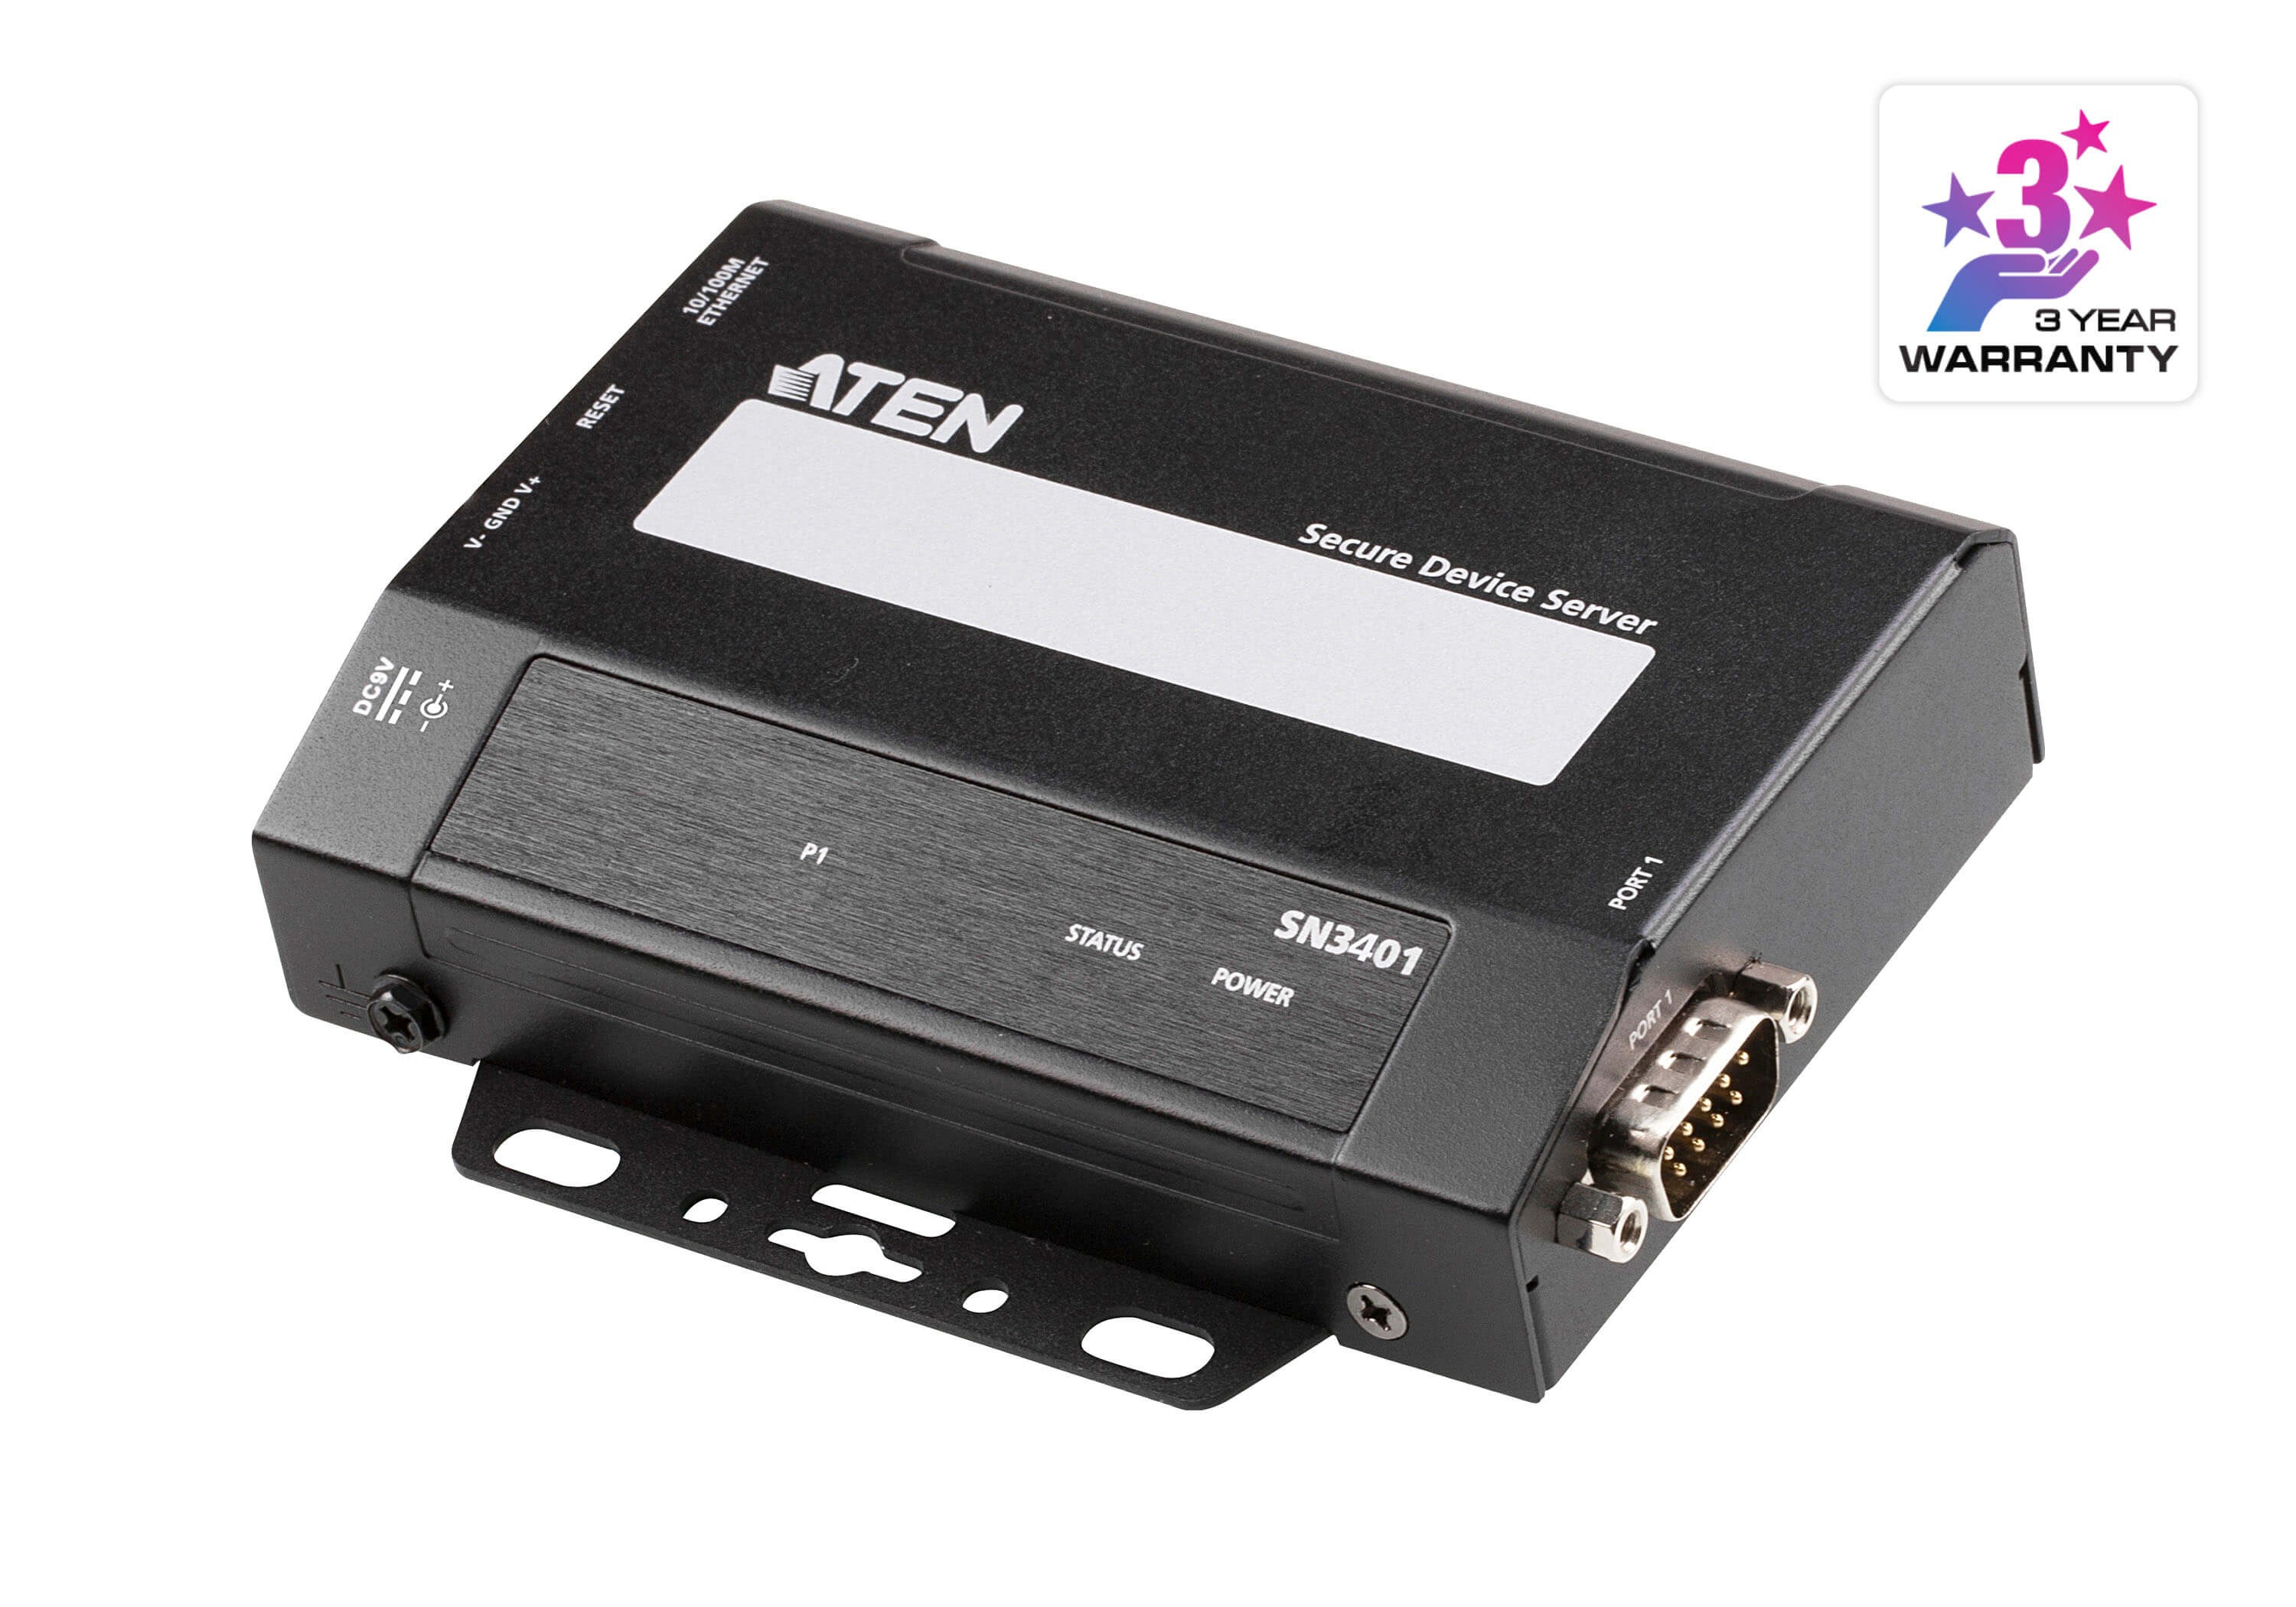 SN3401-AX-G  1-Port RS-232/422/485 Secure Device Server over Ethernet Transmission